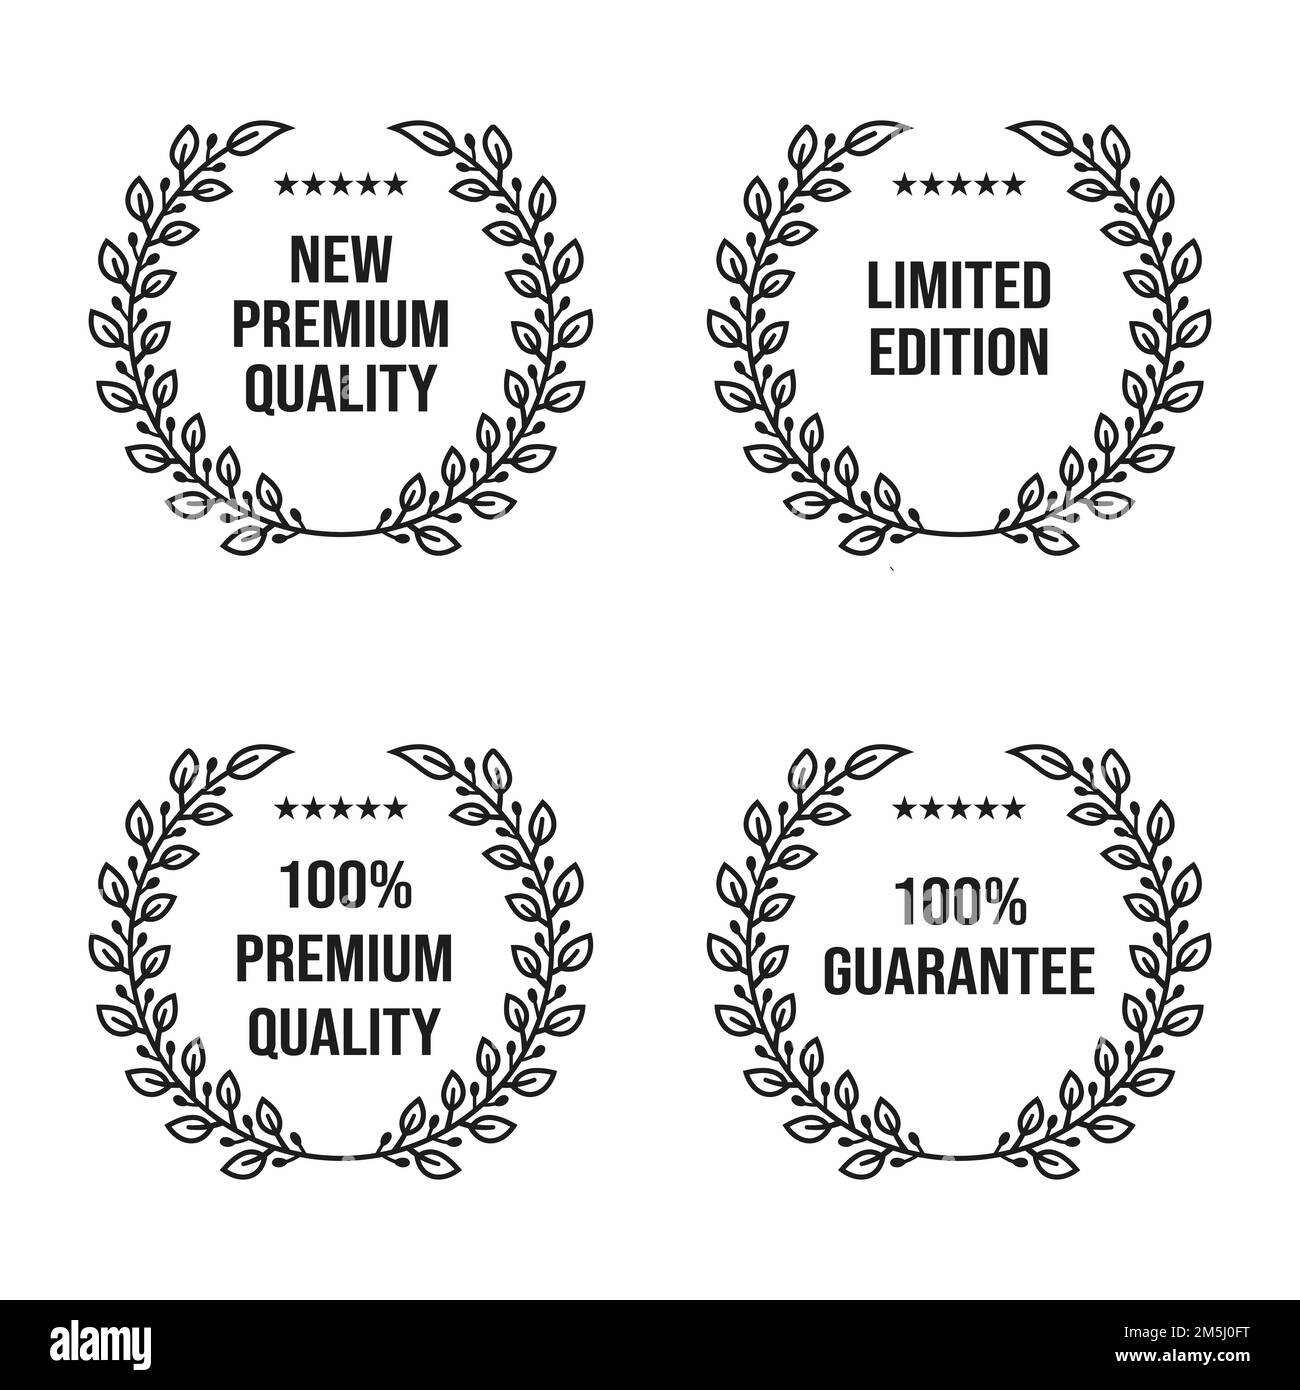 Set of Laurel Leaf for New Premium quality,Limited edition,100% Premium Quality,100% Guarantee. Badge Emblem Label Design Vector Stock Vector